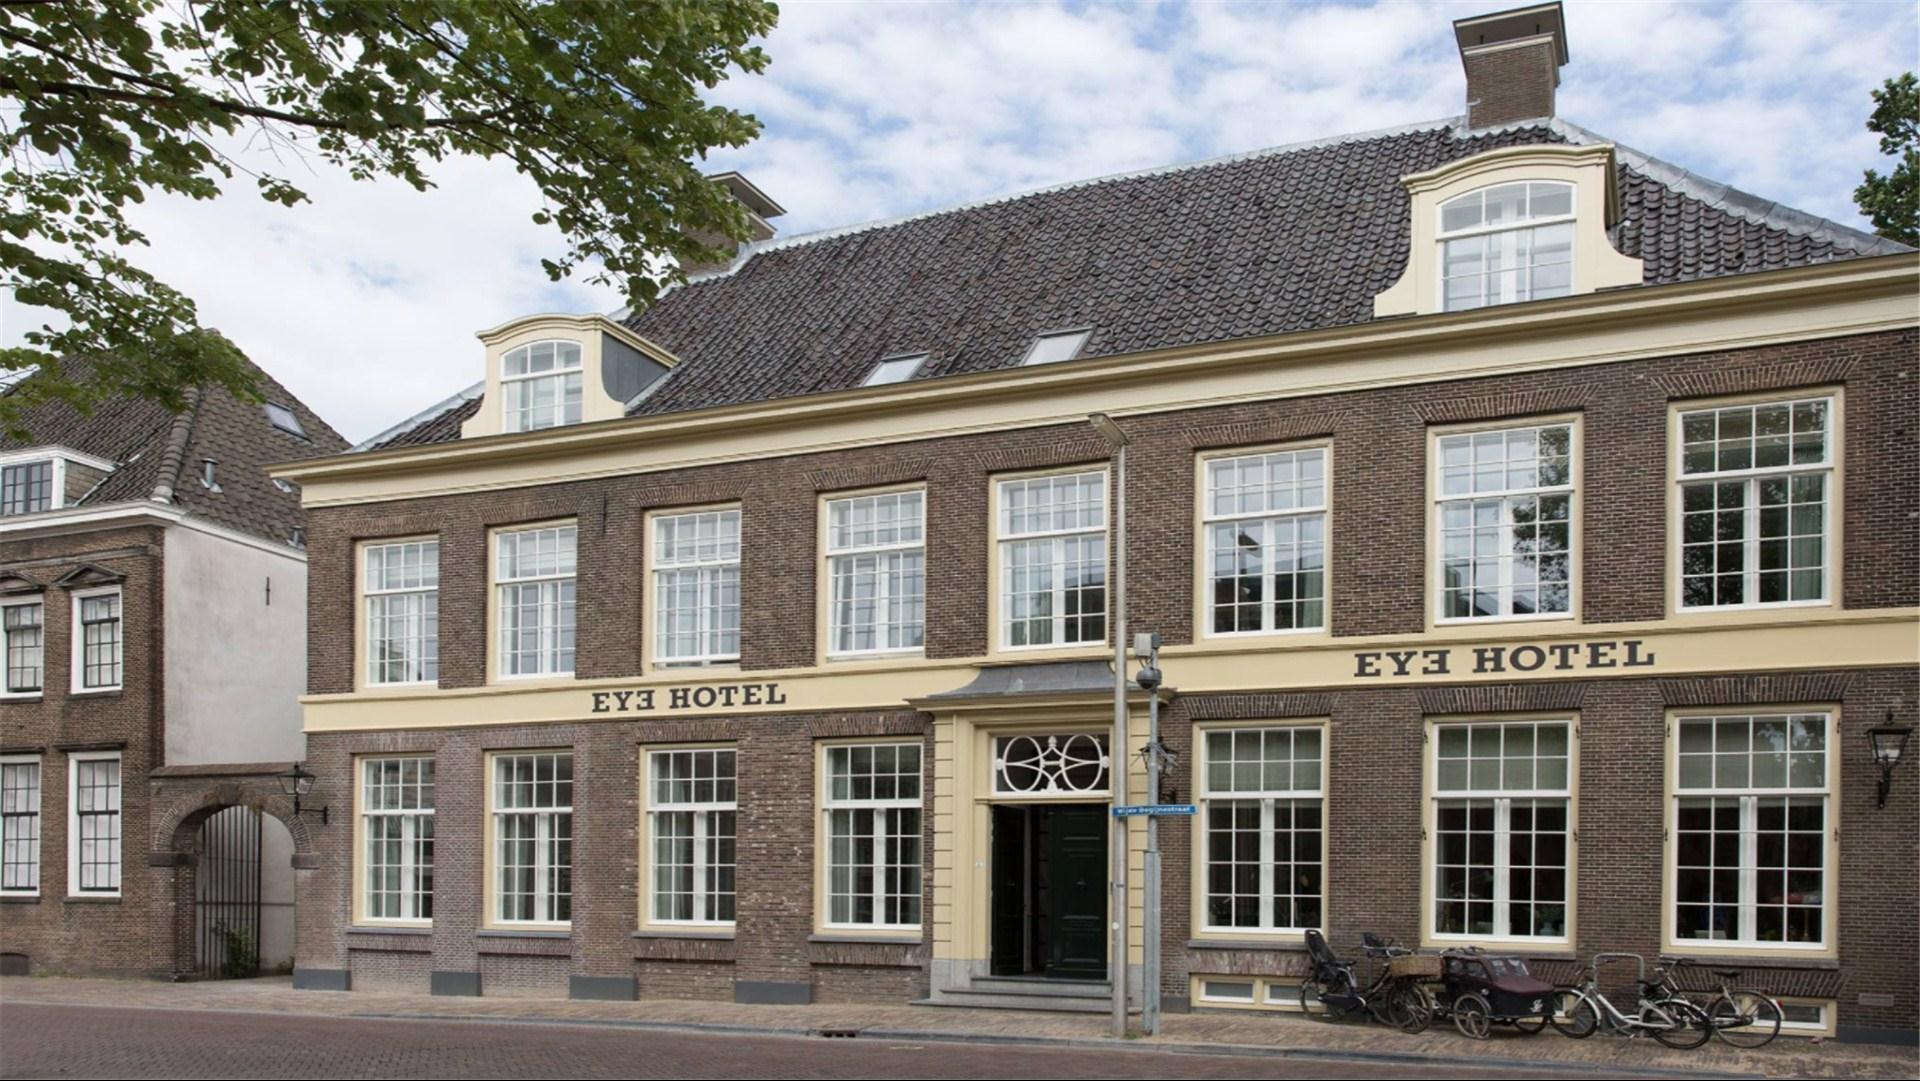 Eye Hotel in Utrecht, NL